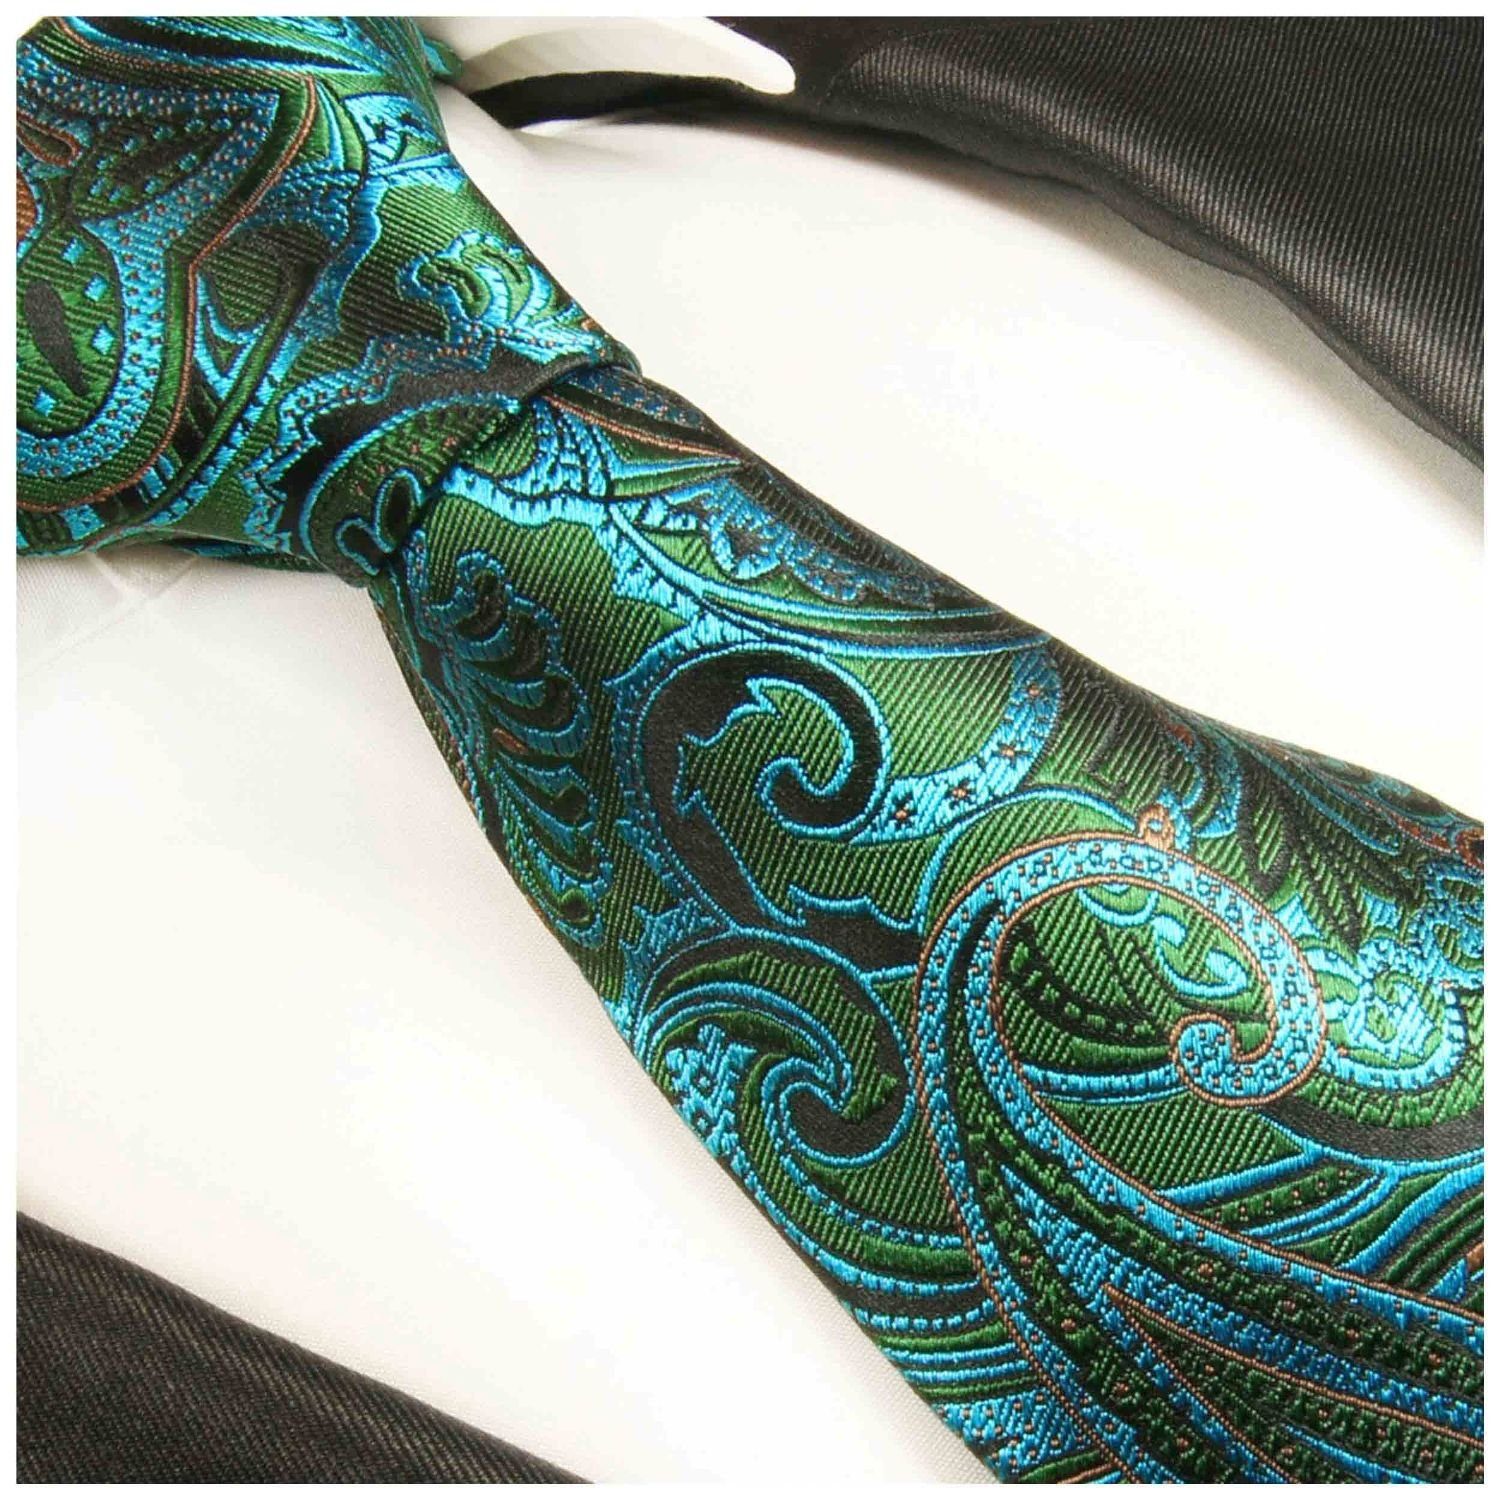 Paul Malone Krawatte Elegante Herren Breit brokat türkis Seidenkrawatte 2008 grün Schlips Seide (8cm), blau 100% paisley